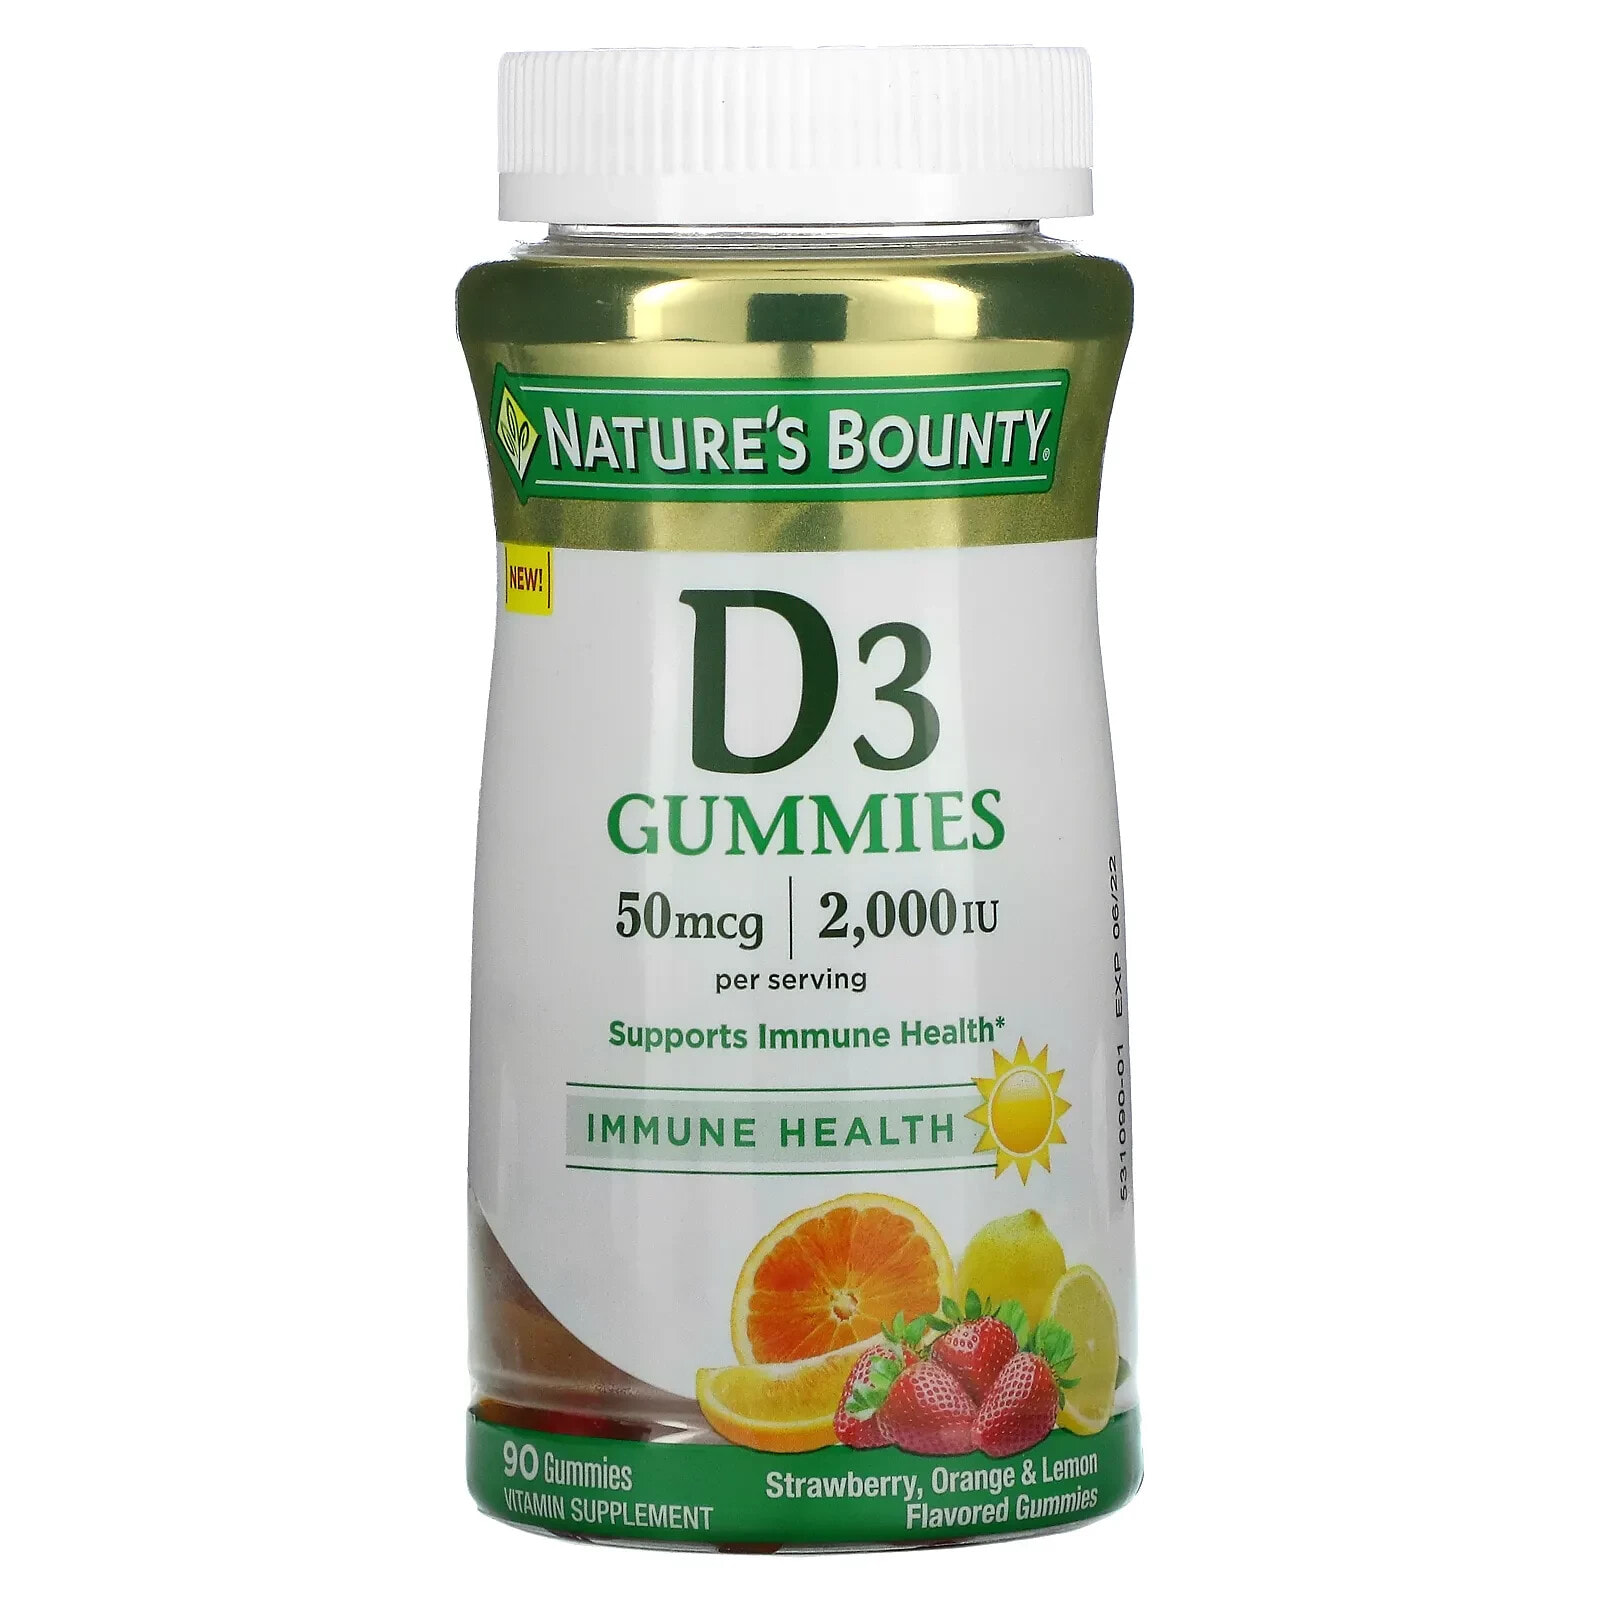 Vitamin D3 Gummies, Strawberry, Orange & Lemon, 2,000 IU, 90 Gummies (25 mcg (1,000 IU) per Gummy)